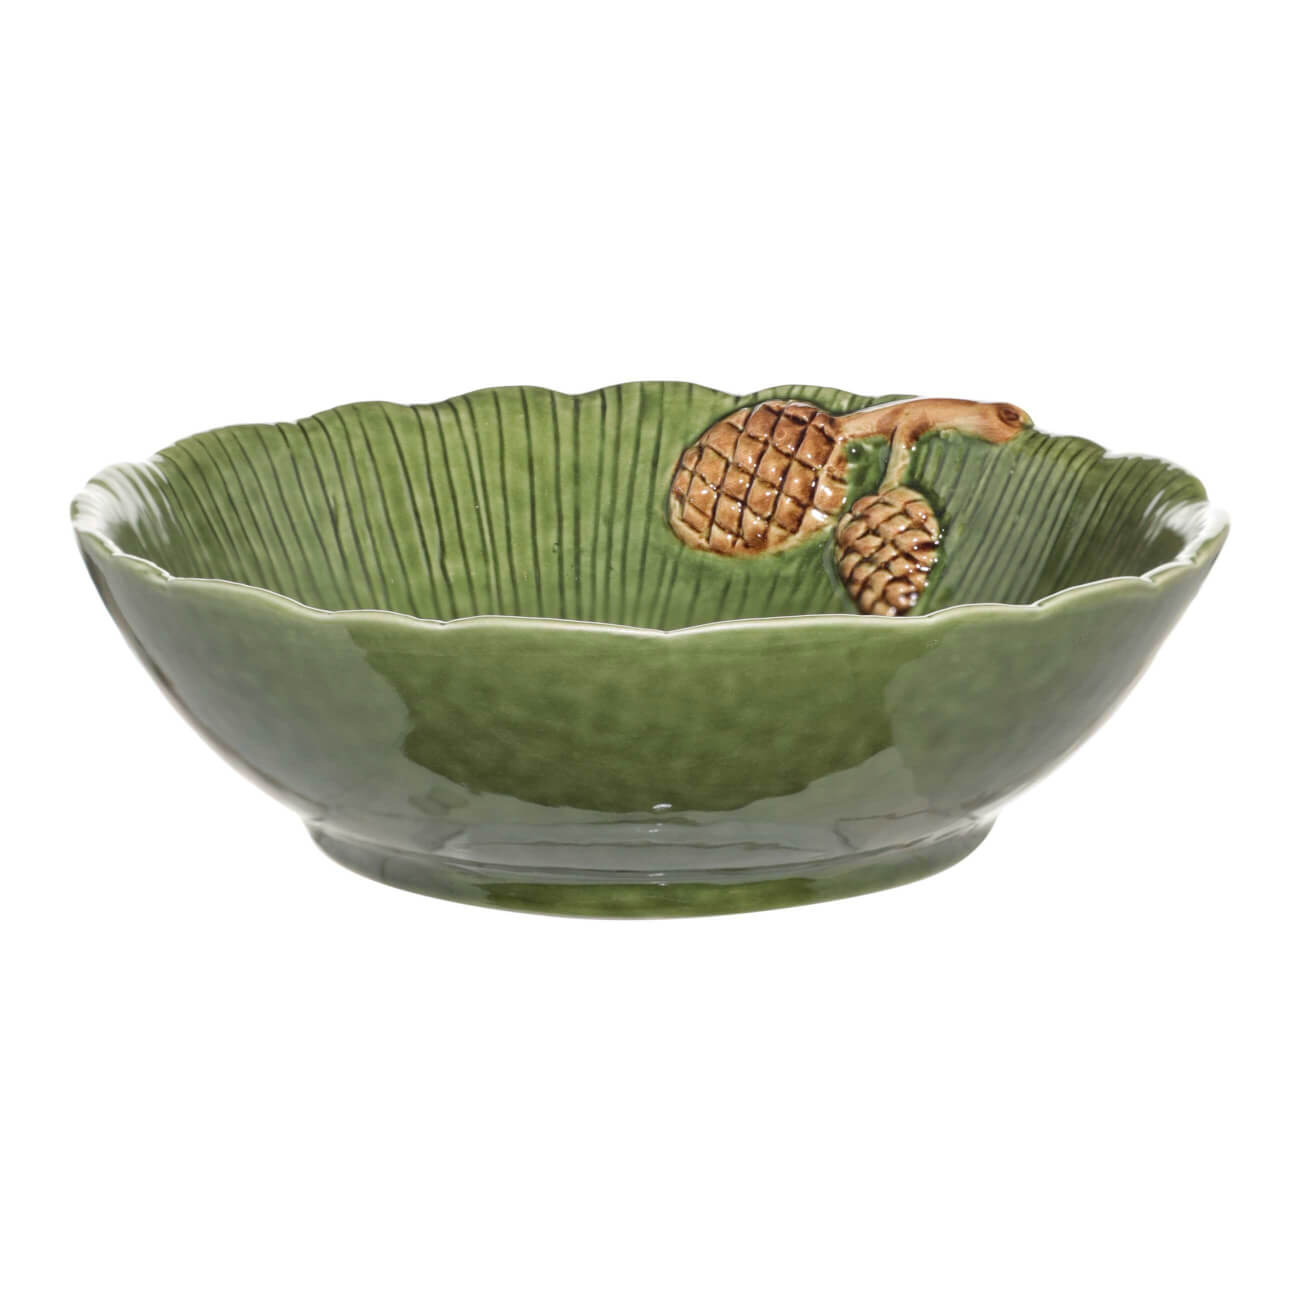 Салатник, 20х6 см, керамика, зеленый, Шишки на листе, Fir cone - фото 1